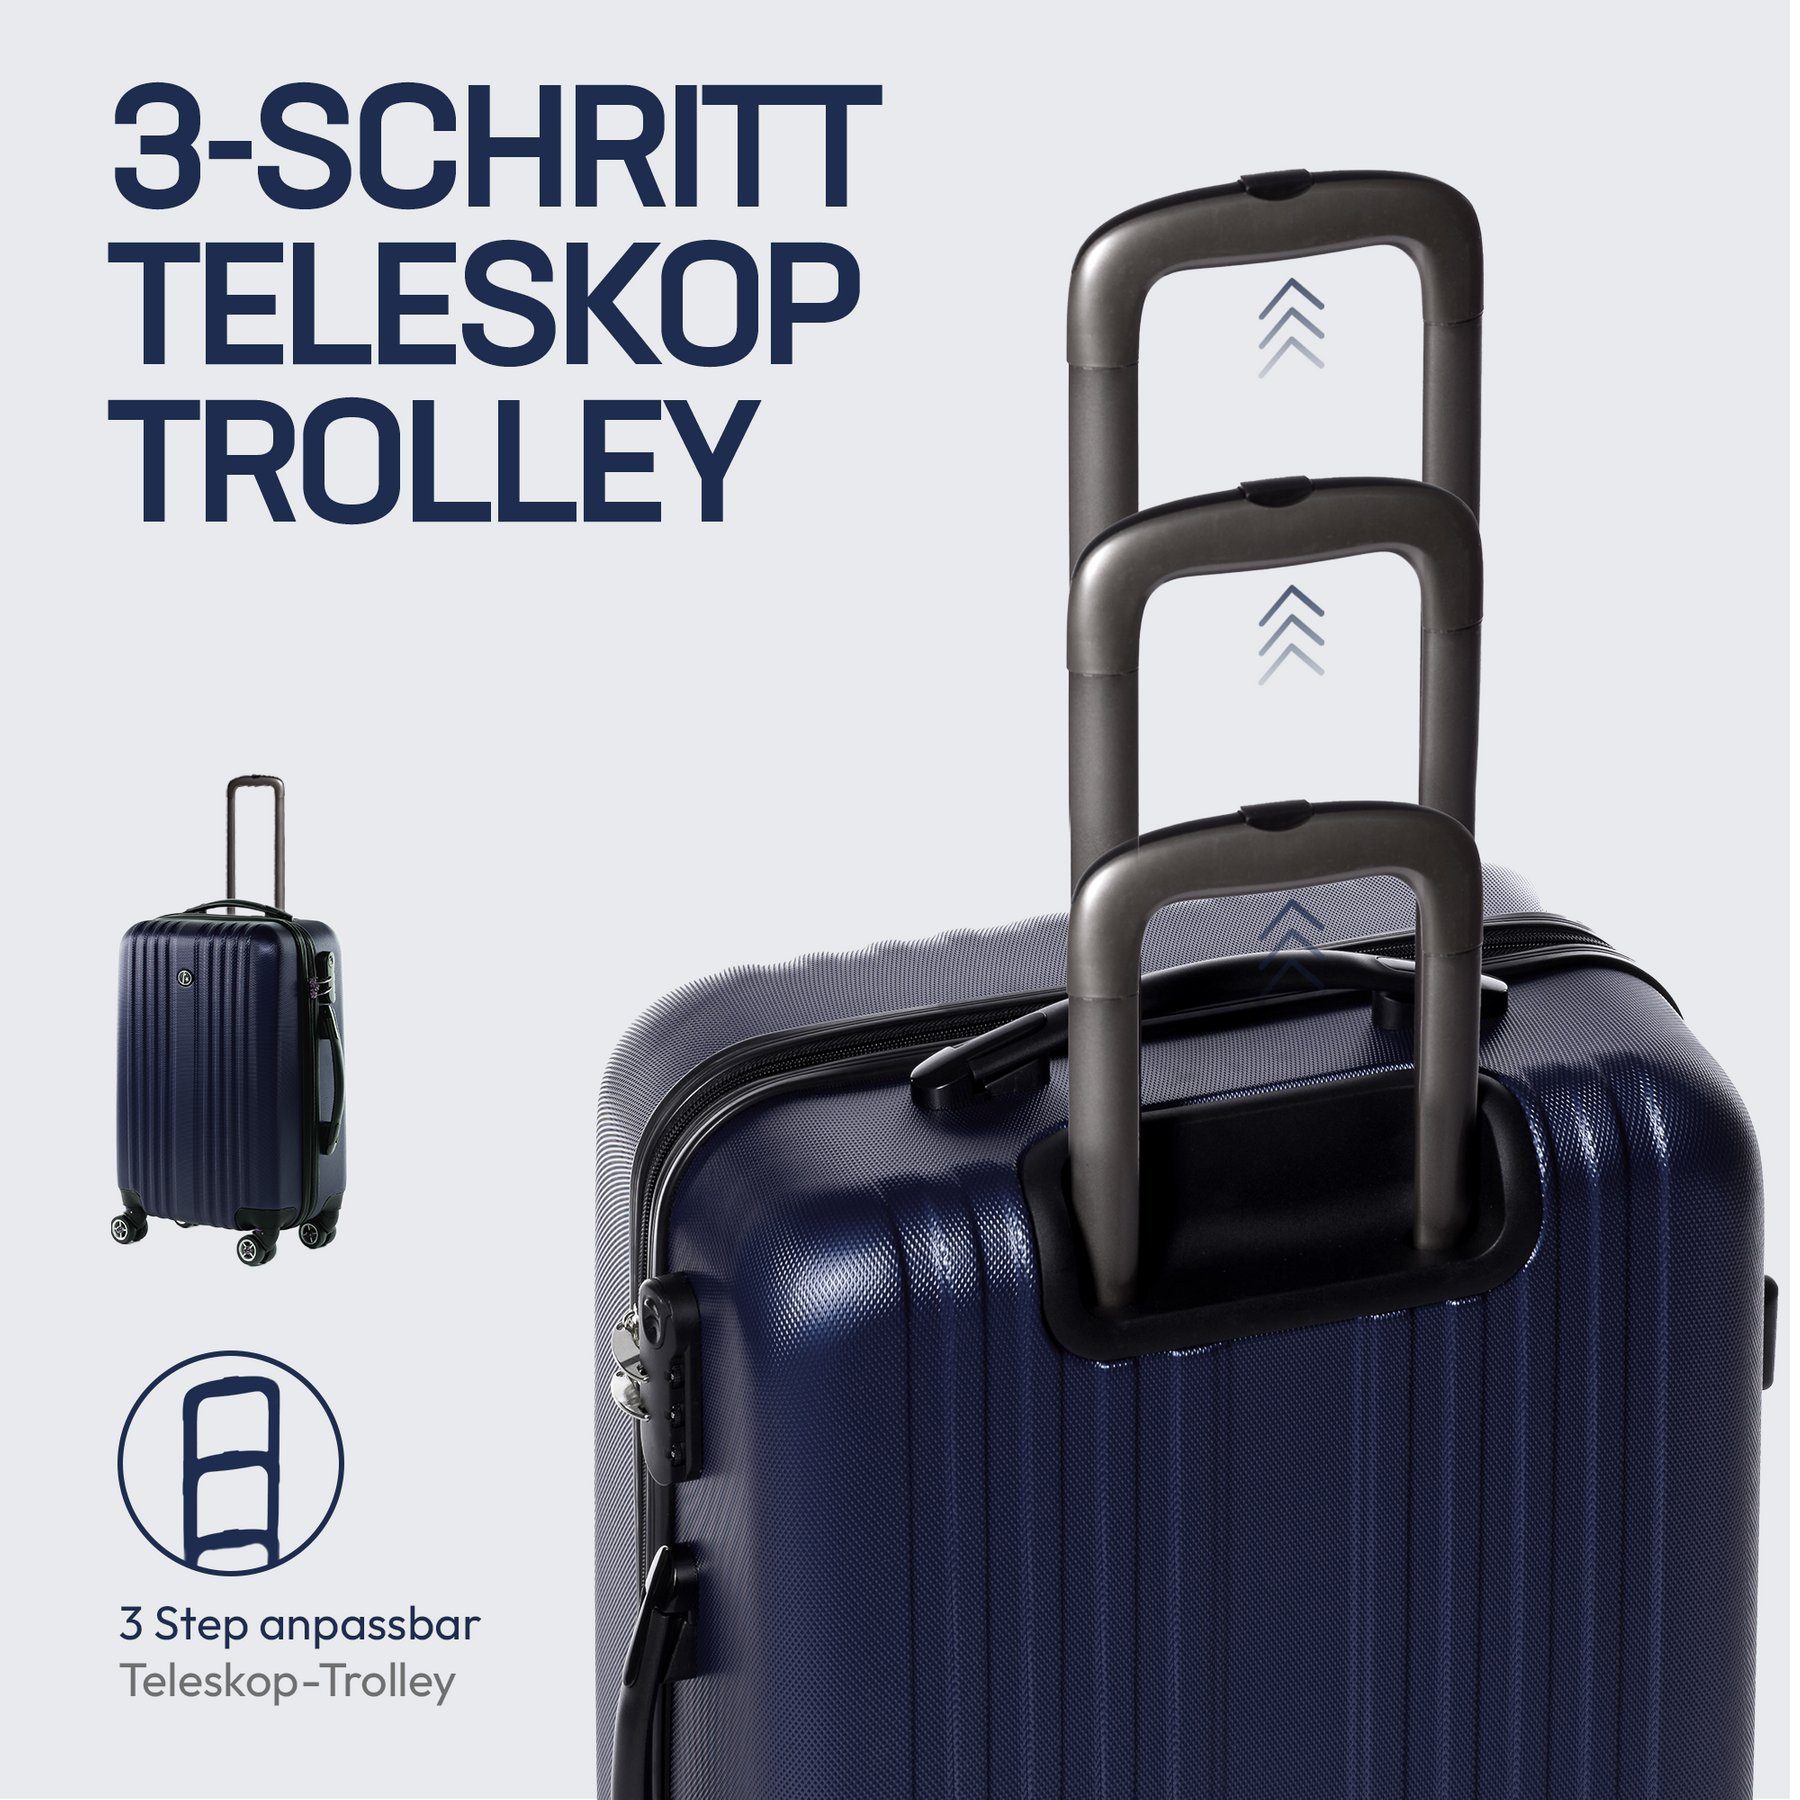 Kofferset Trolley 4 Rollen, teilig Reisekoffer erweiterbar dunkelblau Hartschale Toulouse, 3er Premium FERGÉ Koffer Set, 3 Rollkoffer